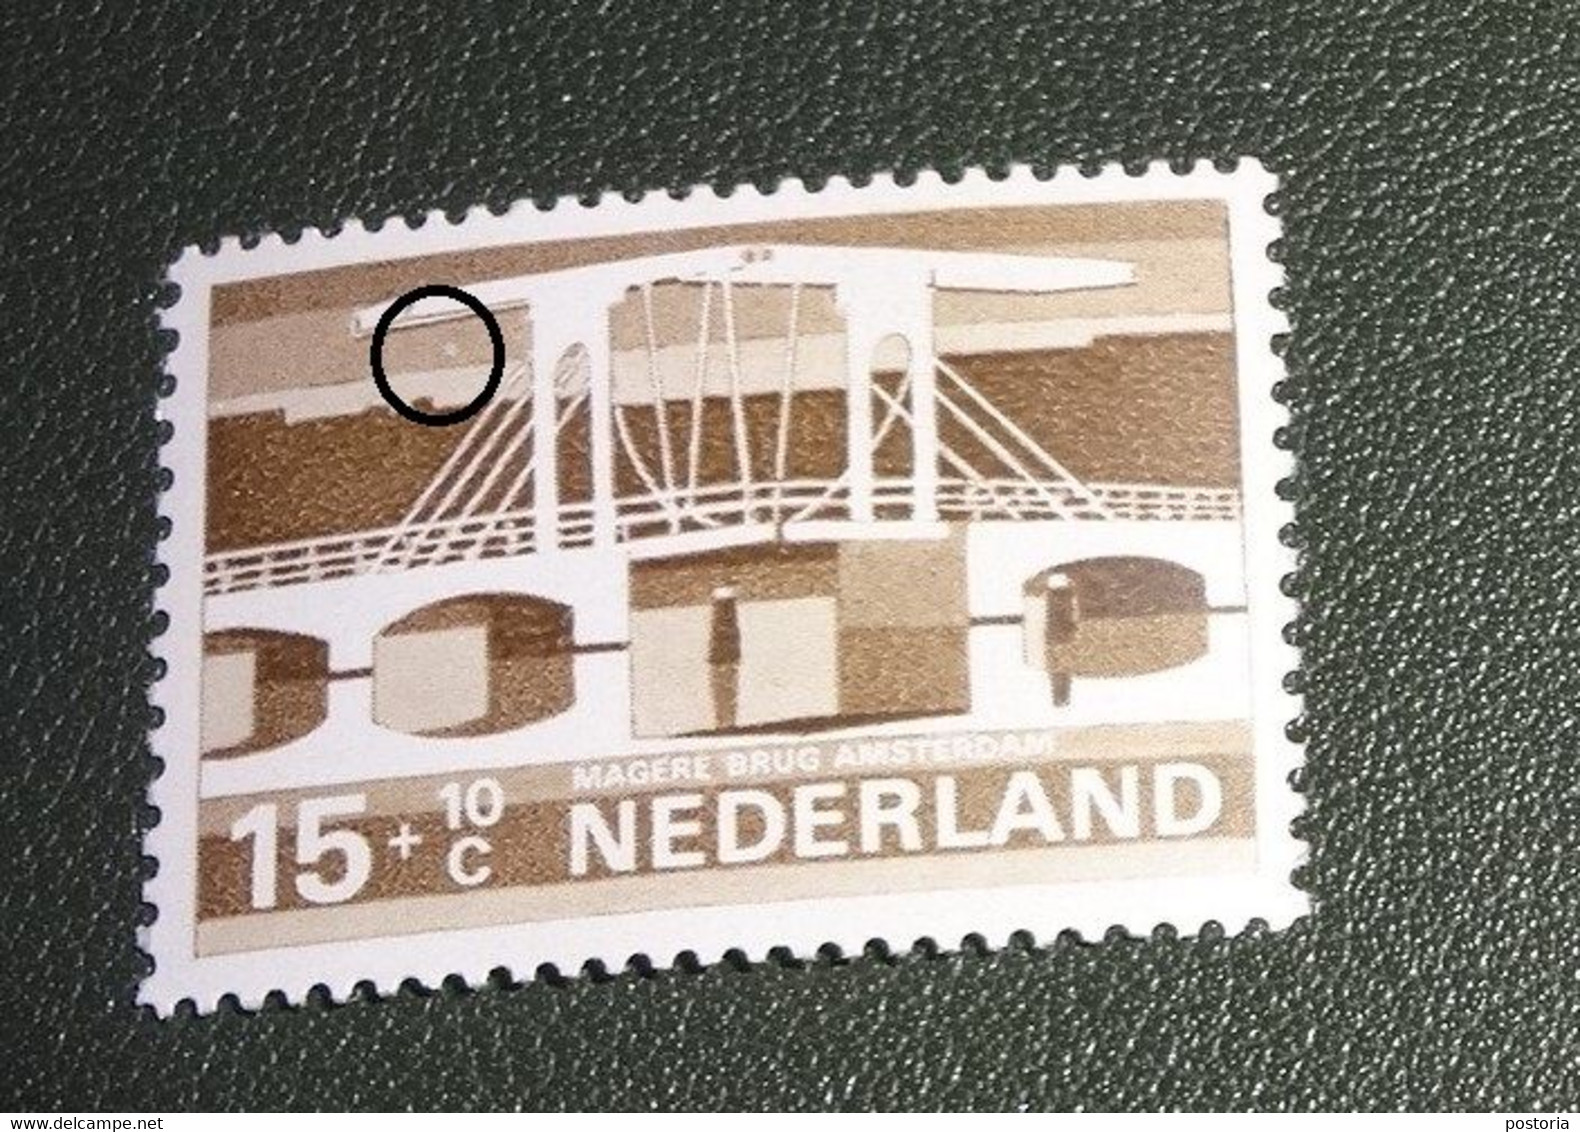 Nederland - MAST - 902 PM - 1968 - Plaatfout - Postfris - Wit Vlekje Onder Ophaalgewicht - Plaatfouten En Curiosa